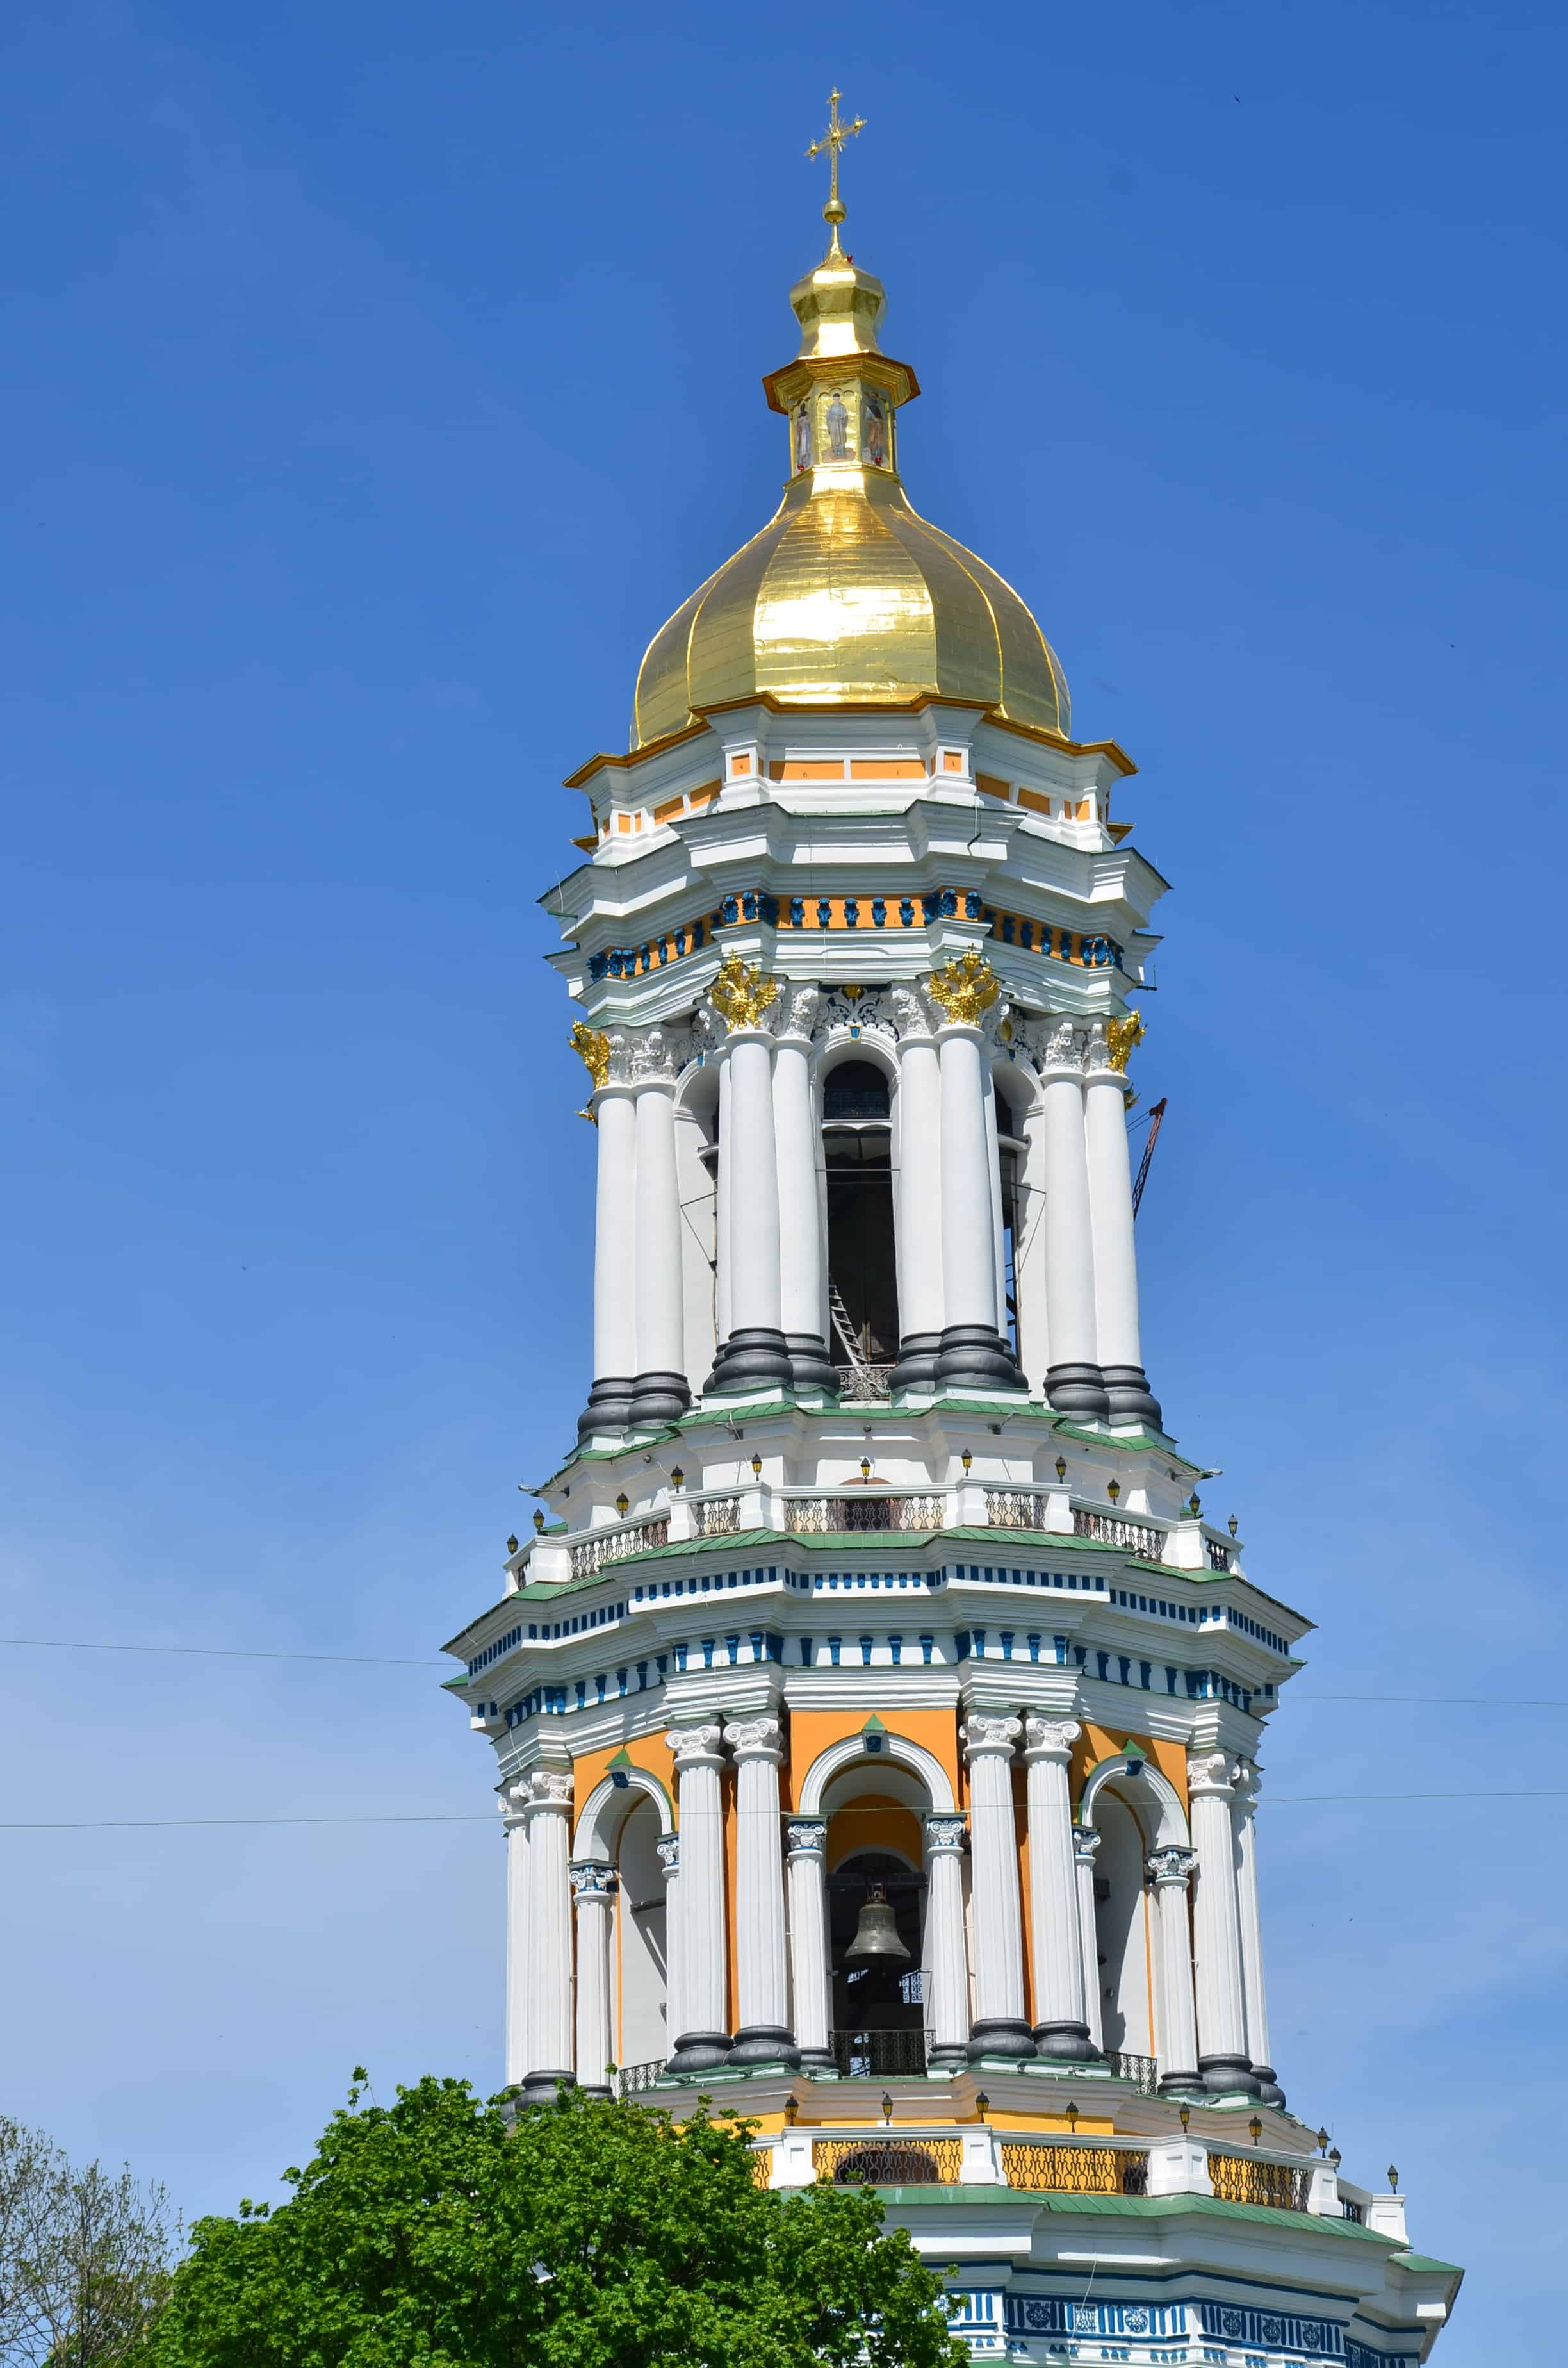 Great Lavra Bell Tower at Kyiv Pechersk Lavra in Kyiv, Ukraine